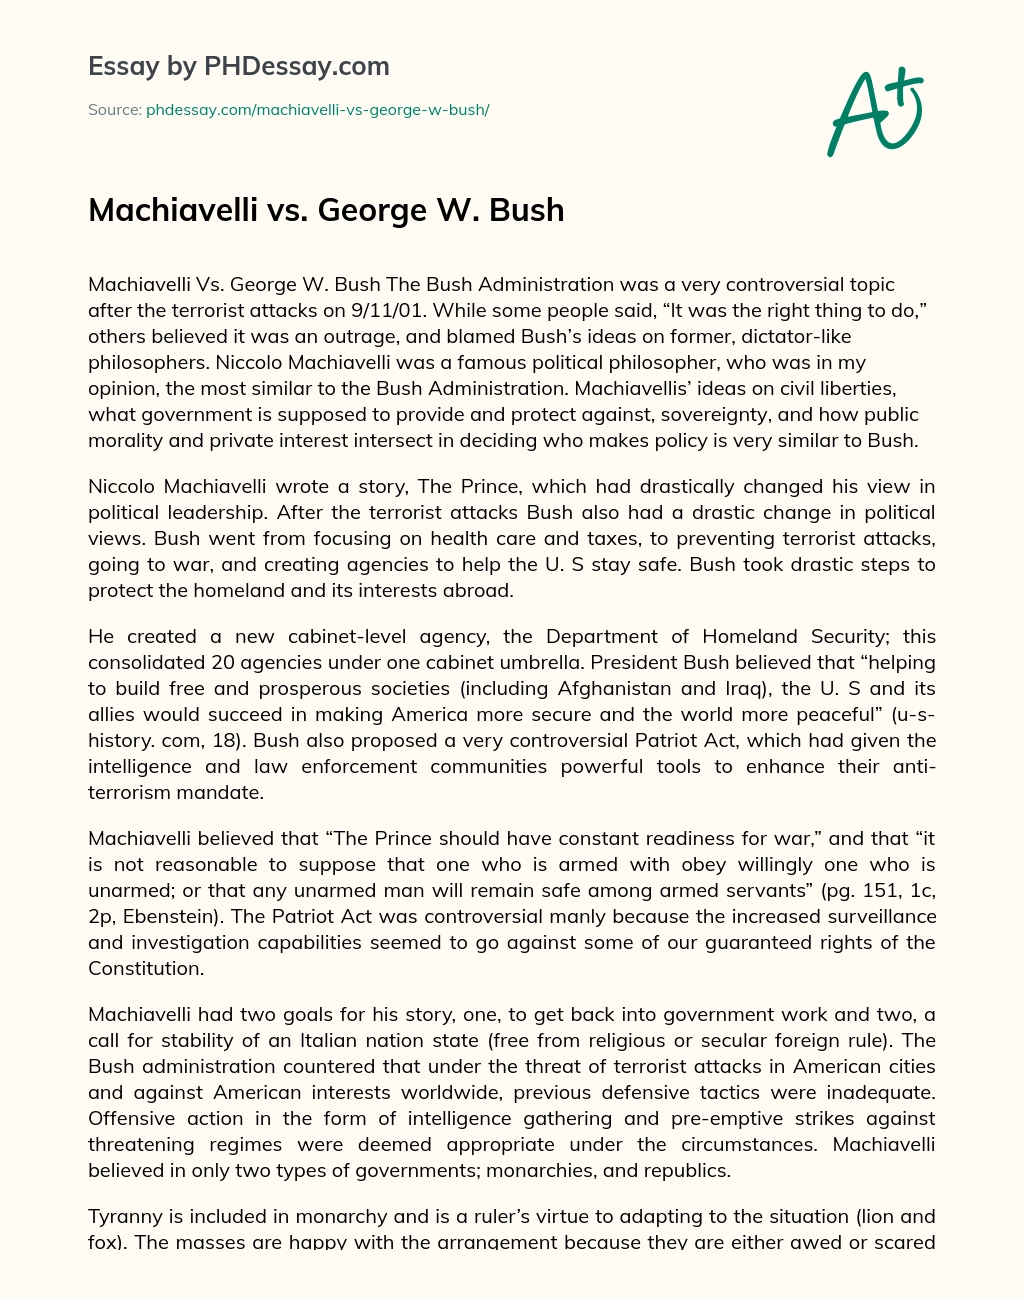 Machiavelli vs. George W. Bush essay